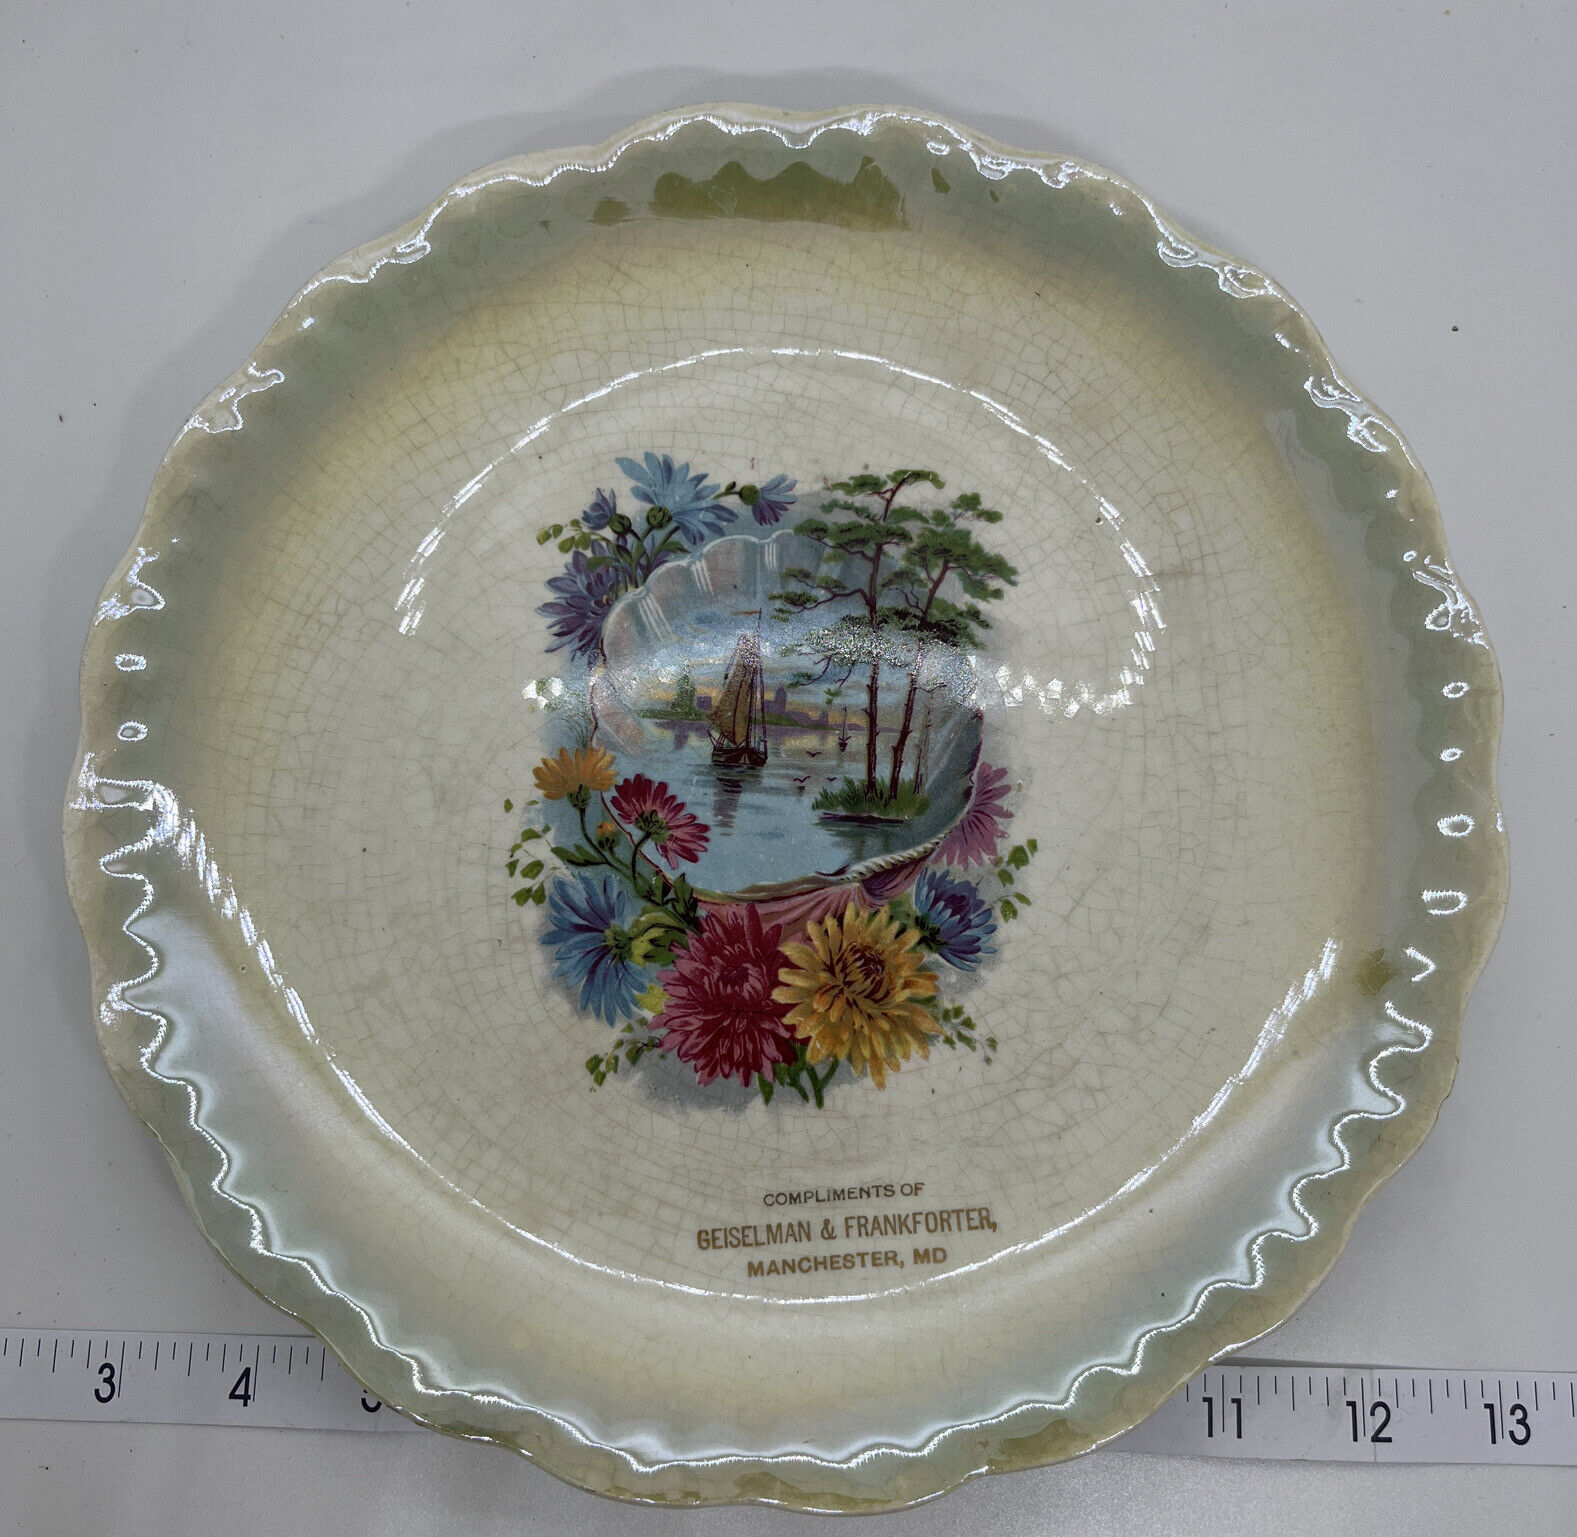 Antique MANCHESTER MD maryland souvenir Plate RARE Geiselman & Frankforter 